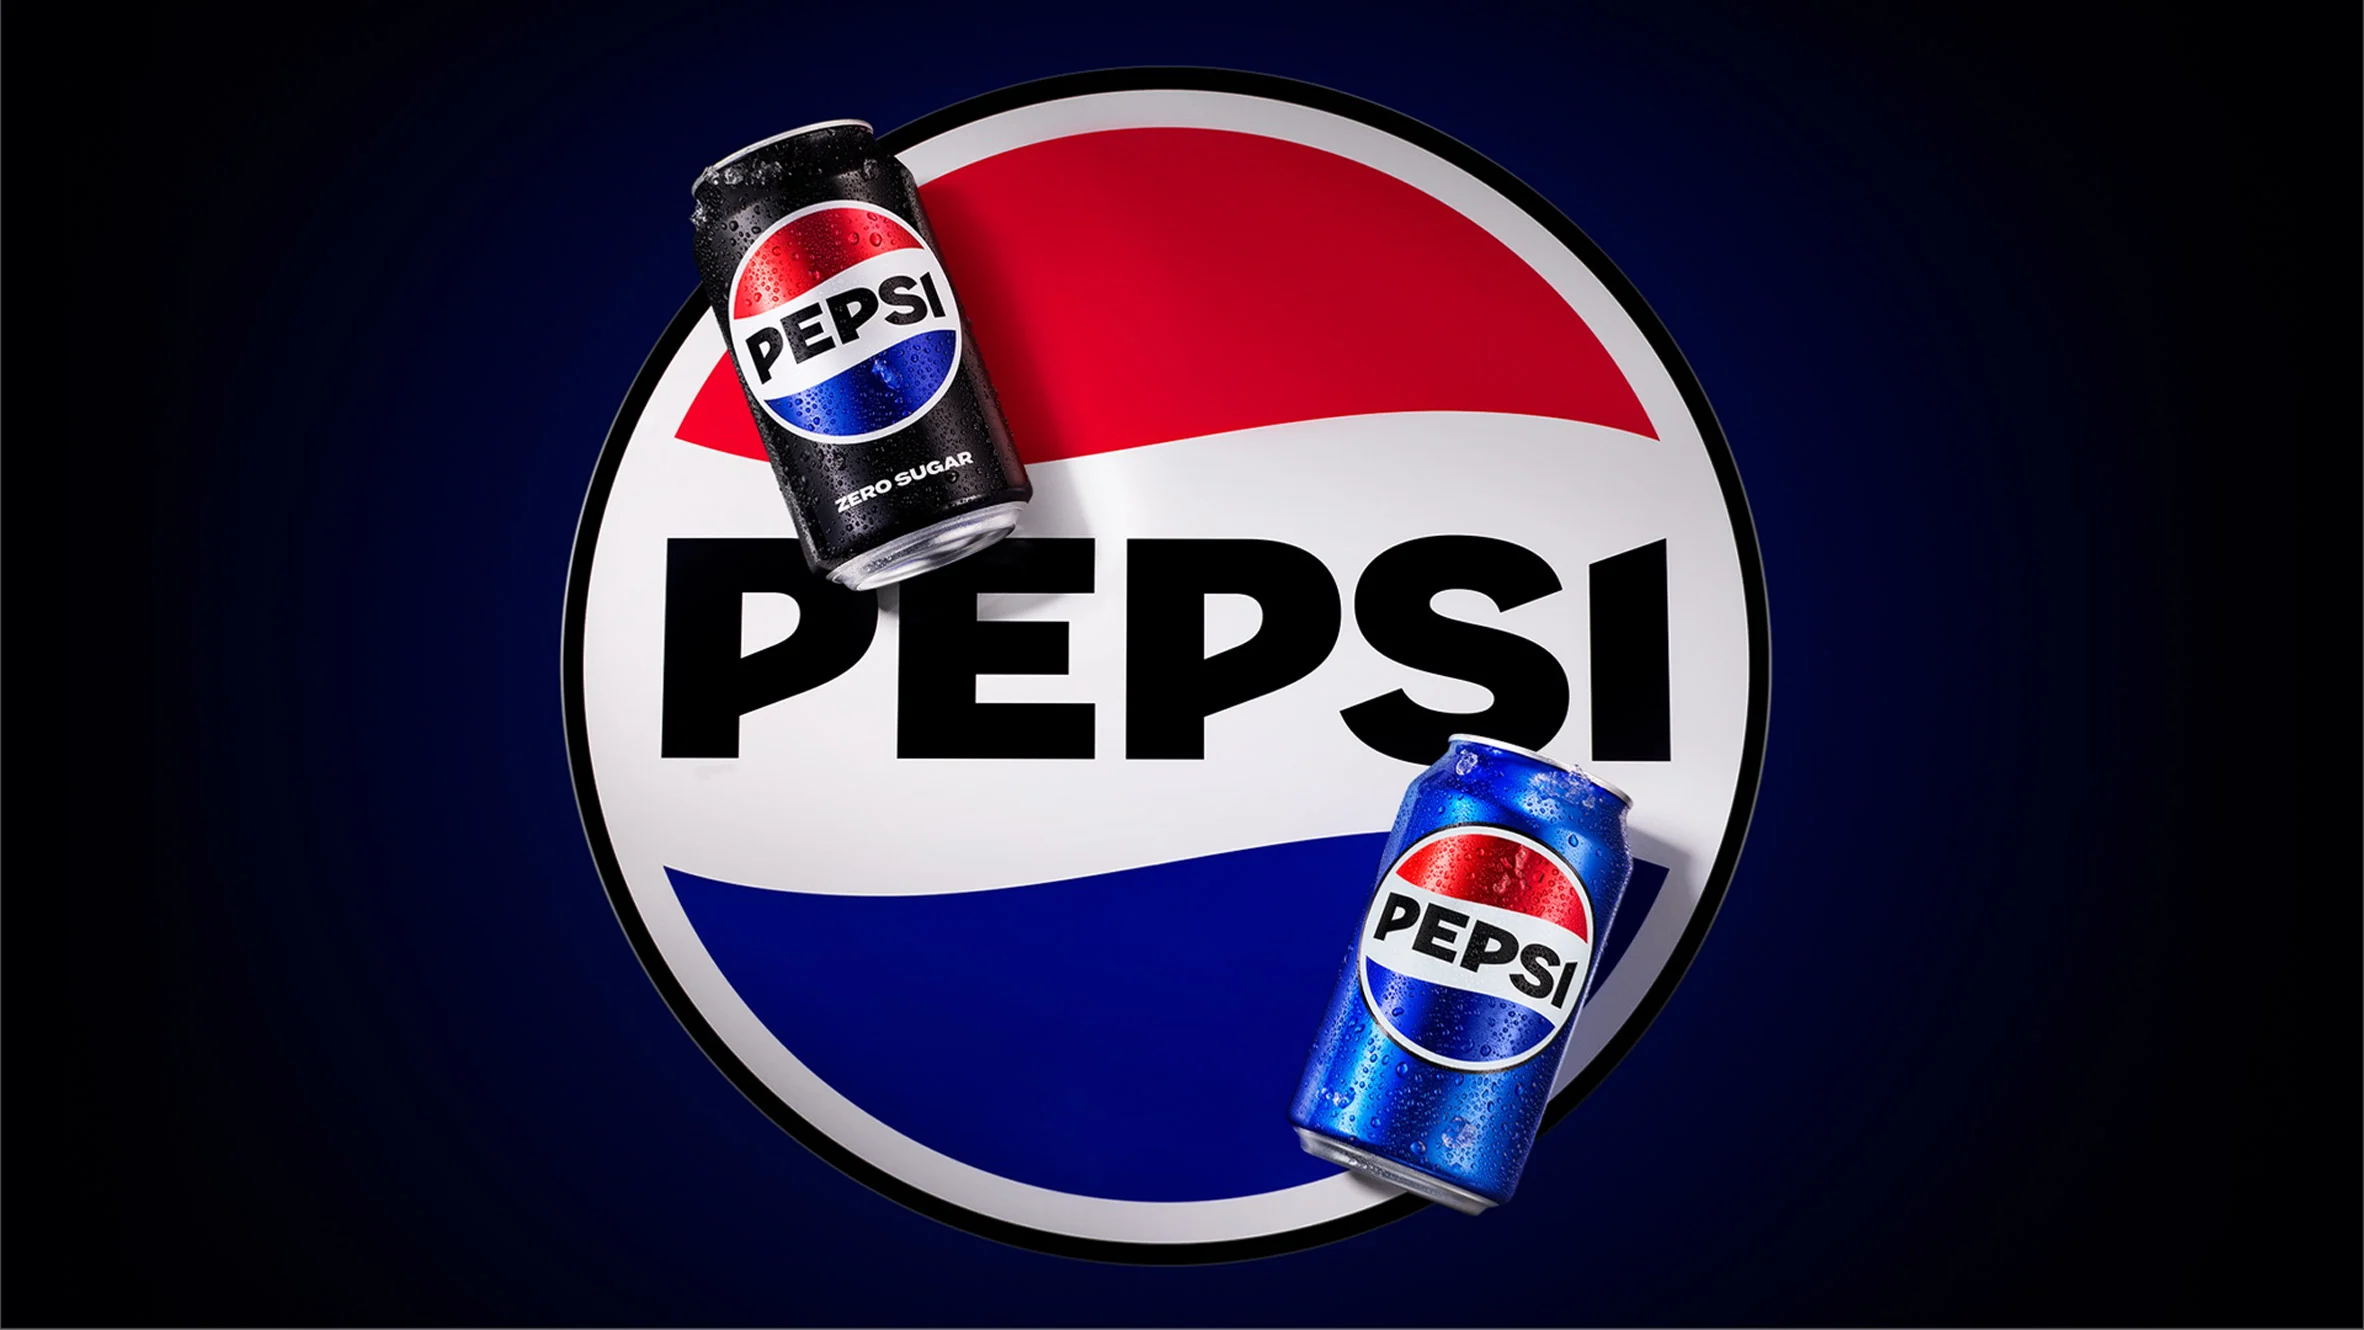 Фирменный стиль, Мауро Порчини, Логотип, Дизайн упаковки, Pepsi